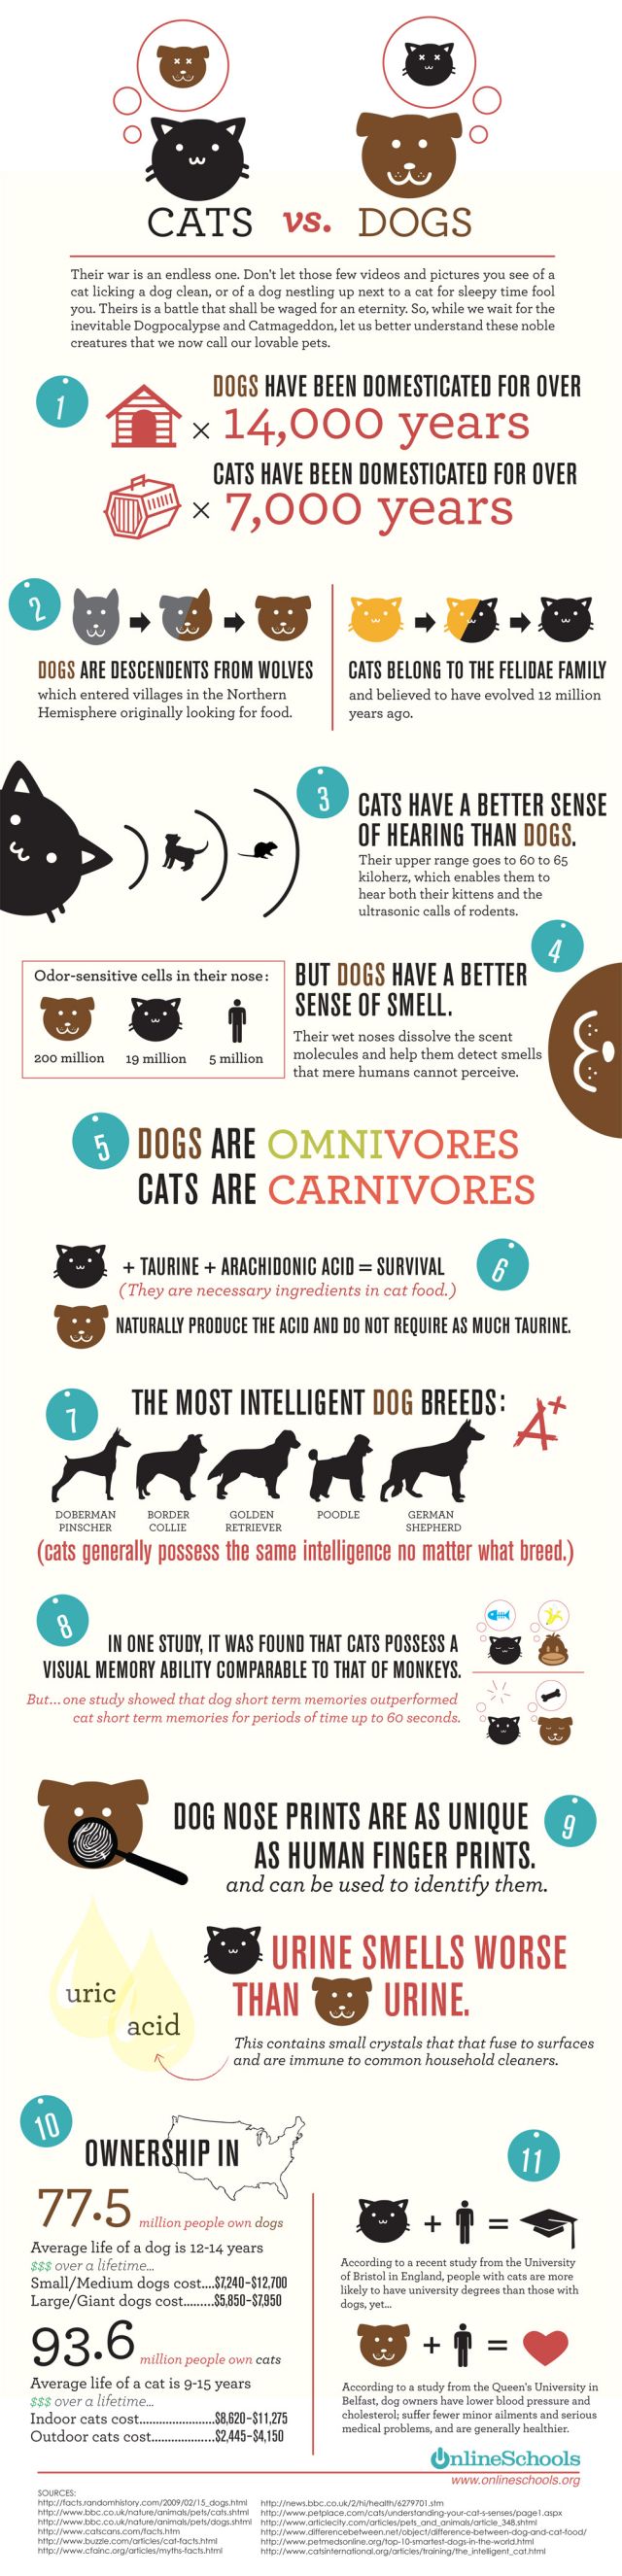 catsversusdogs